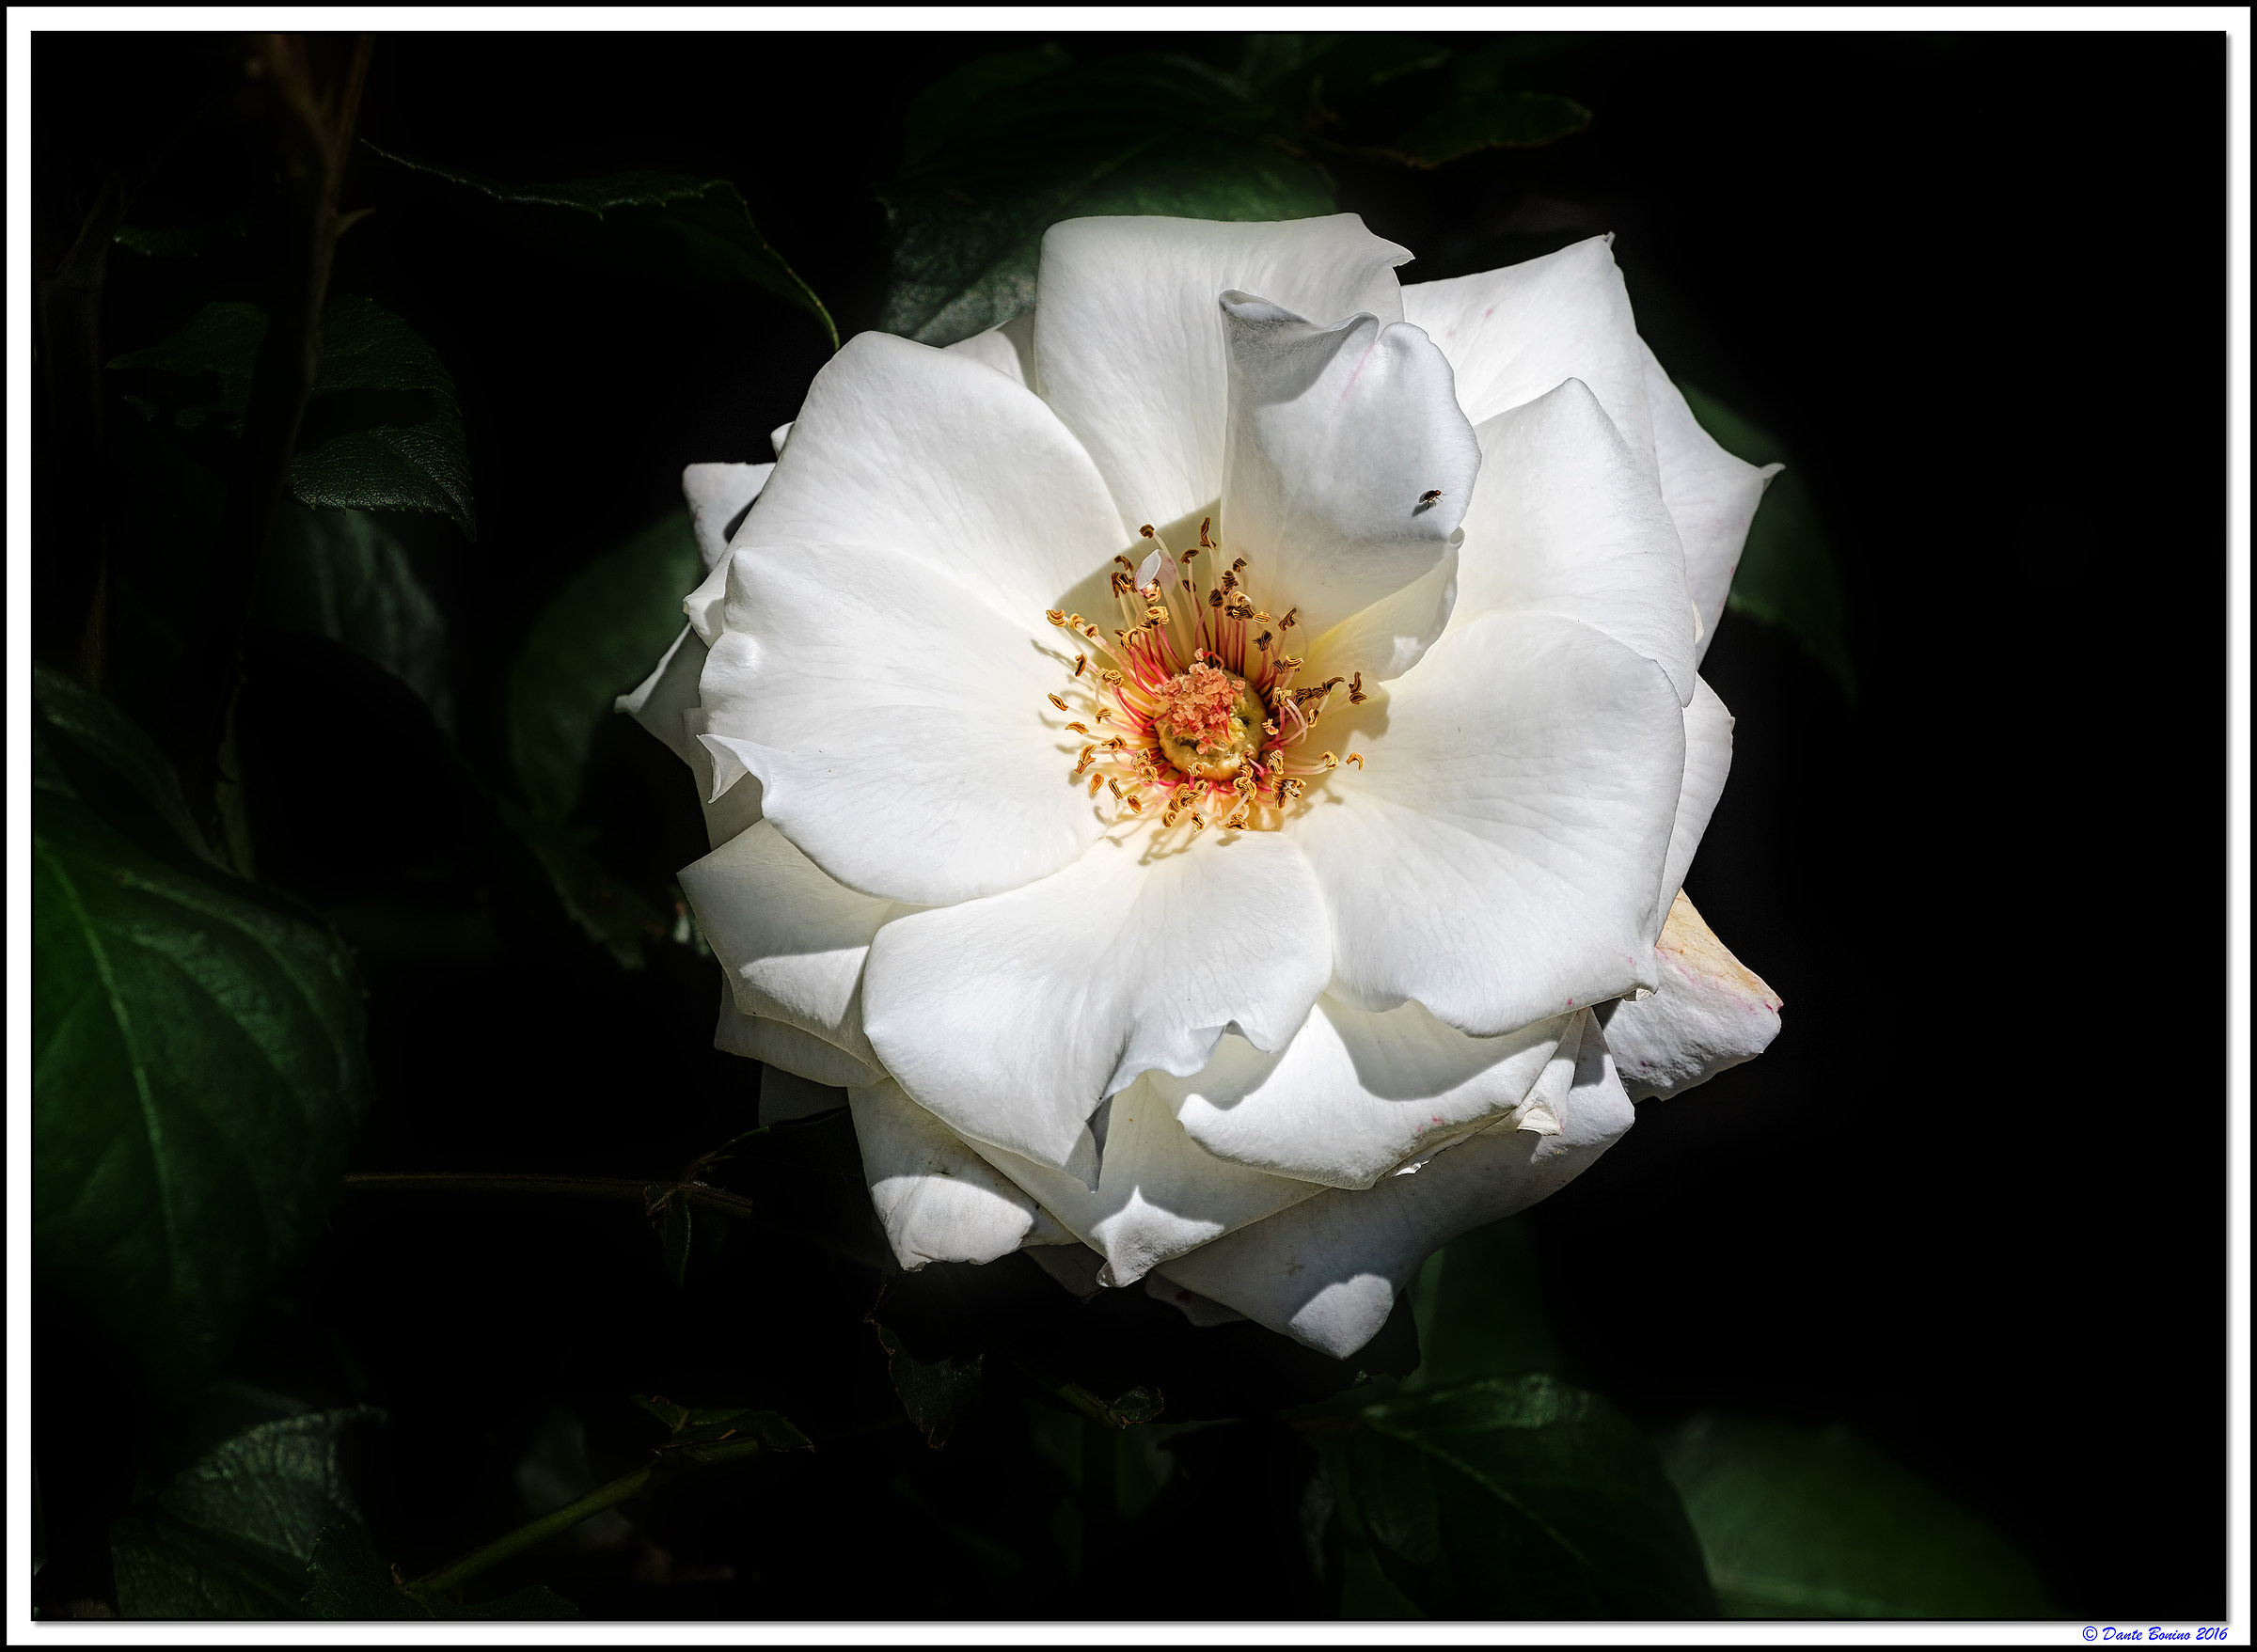 The white rose...